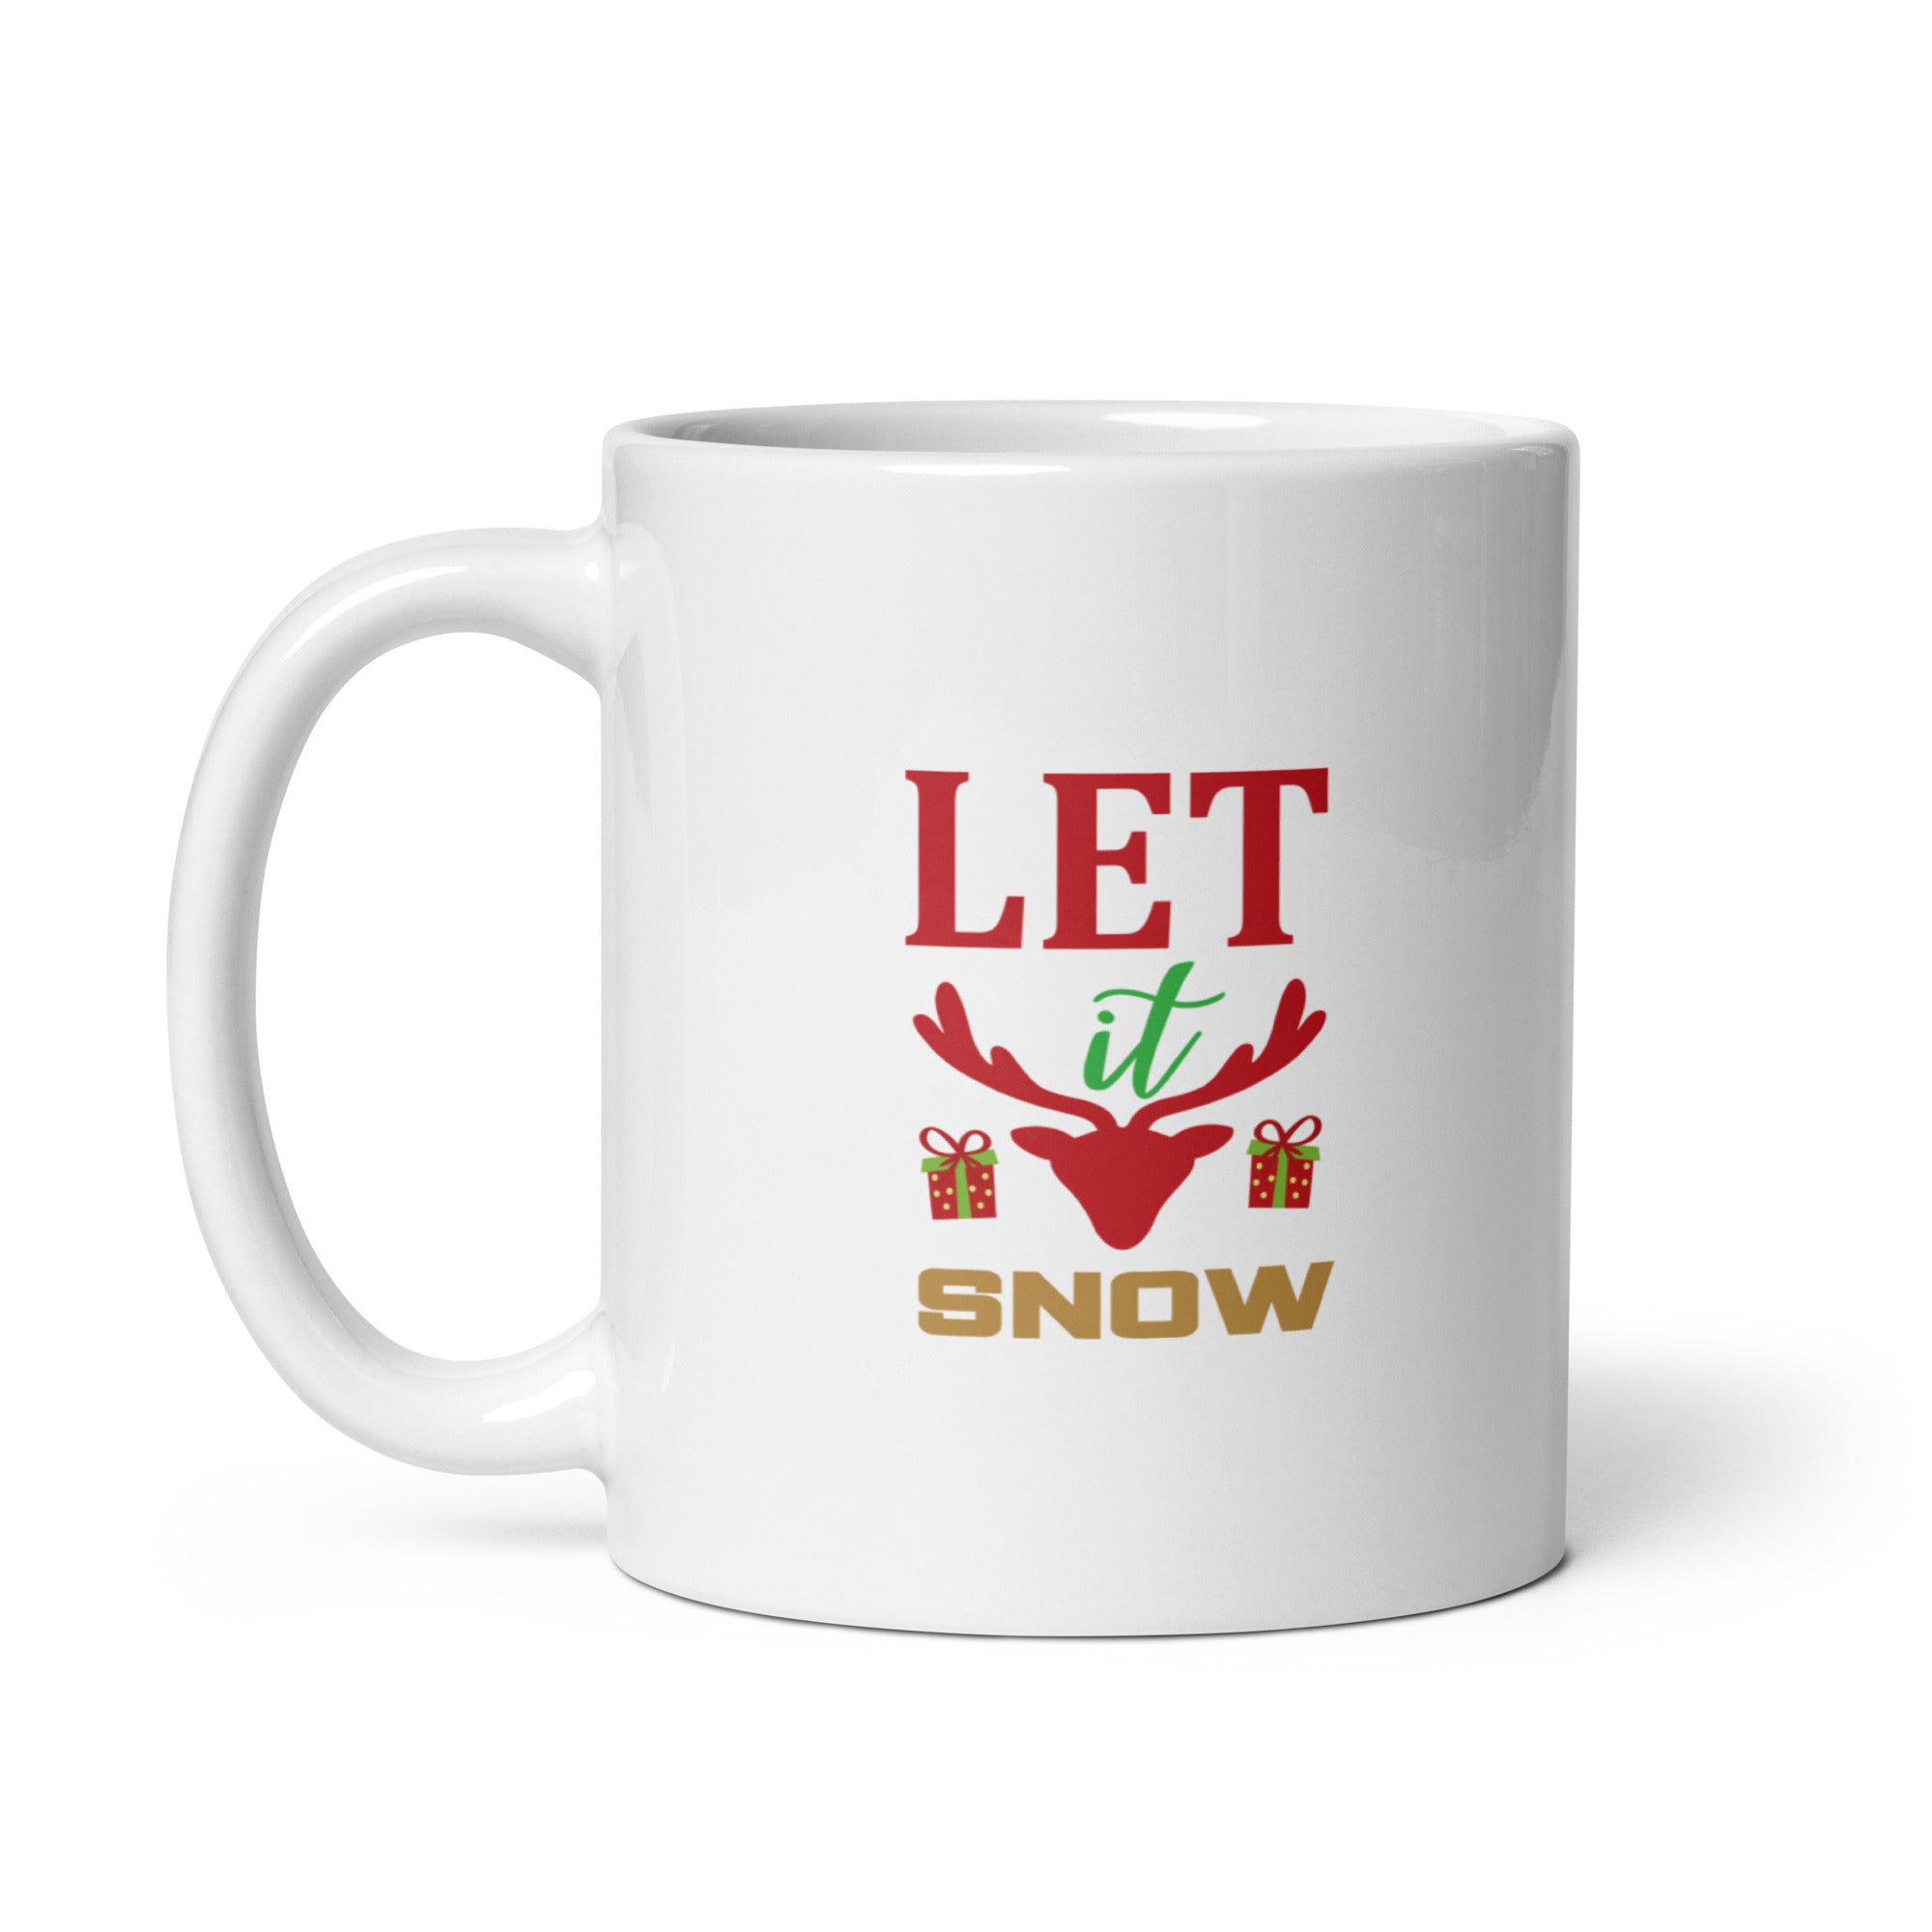 Let It Snow - White glossy mug